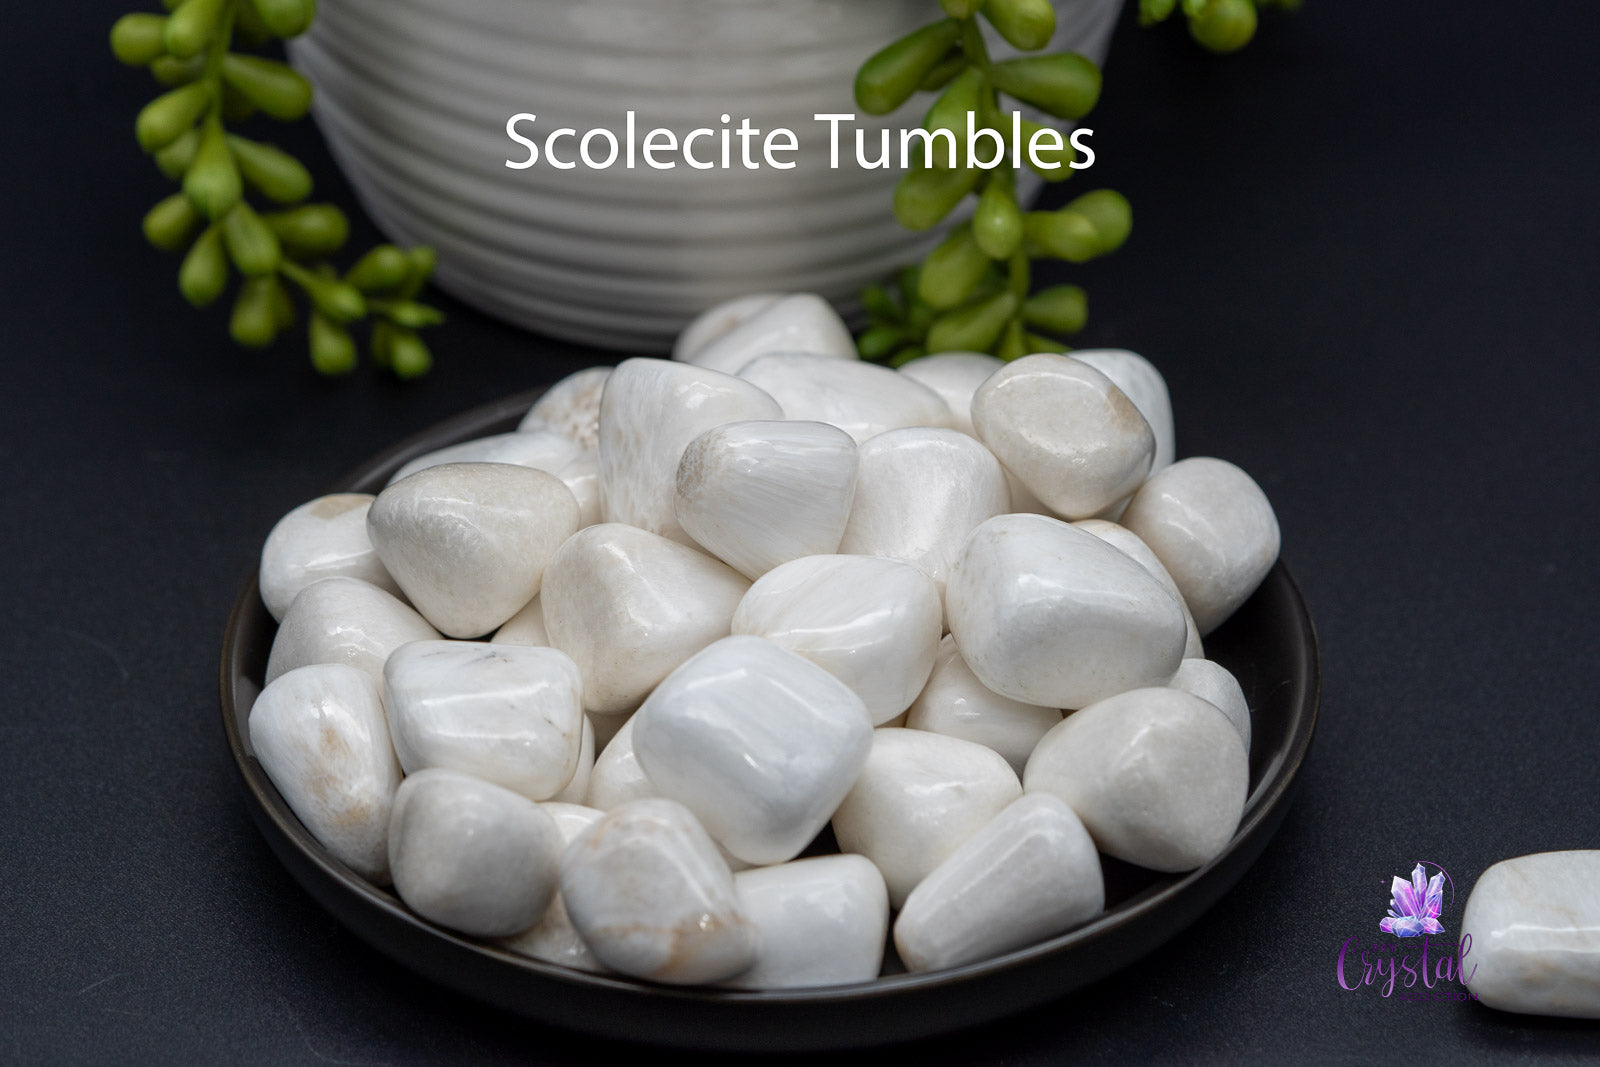 Scolecite Tumbles - My Crystal Addiction